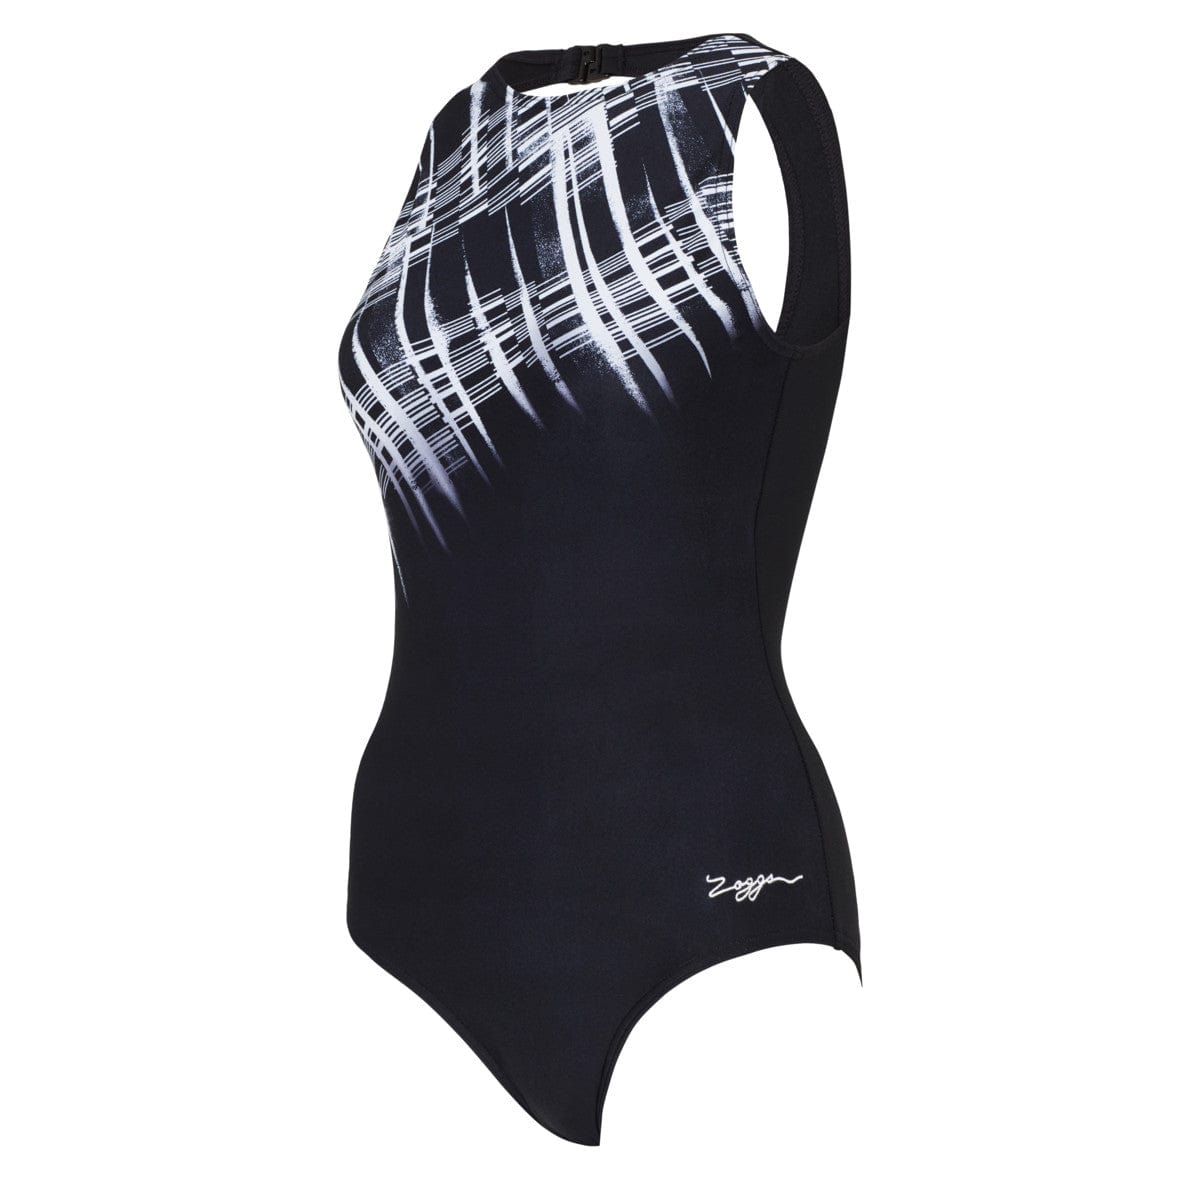 Graffix Hi Front One Piece - Zoggs - Splash Swimwear  - chlorine resist, Jan22, zoggs - Splash Swimwear 